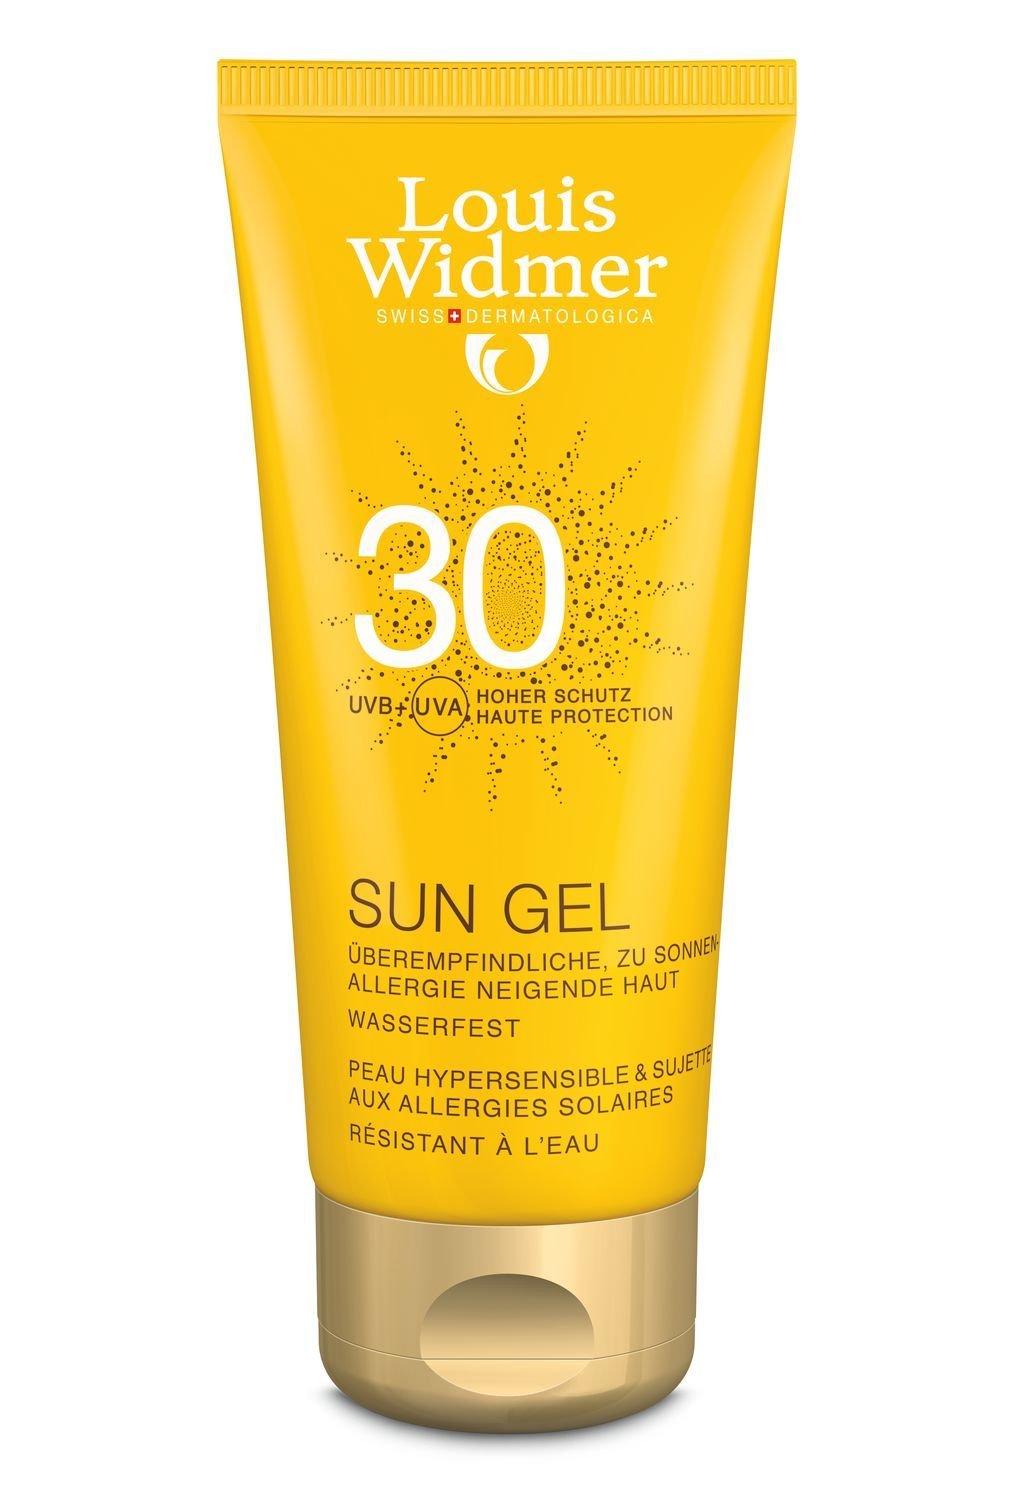 Louis Widmer  SUN GEL 30 Sun Gel 30 parfumé 